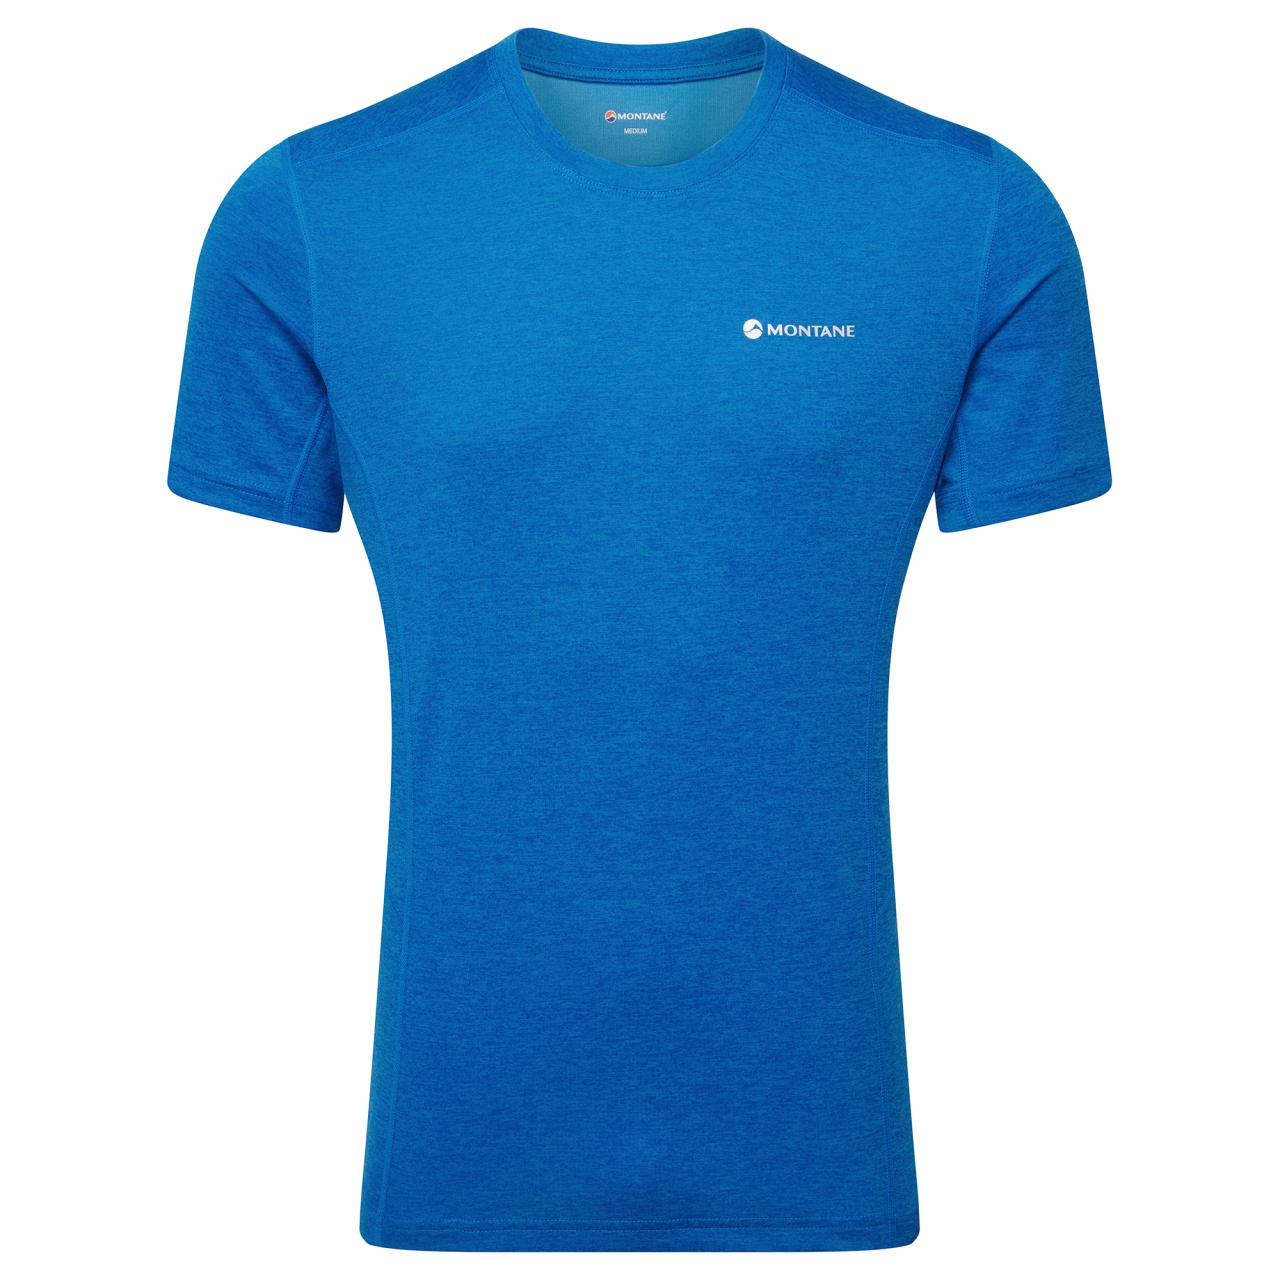 Montane pánské triko Dart T-Shirt Barva: neptune blue, Velikost: XXL